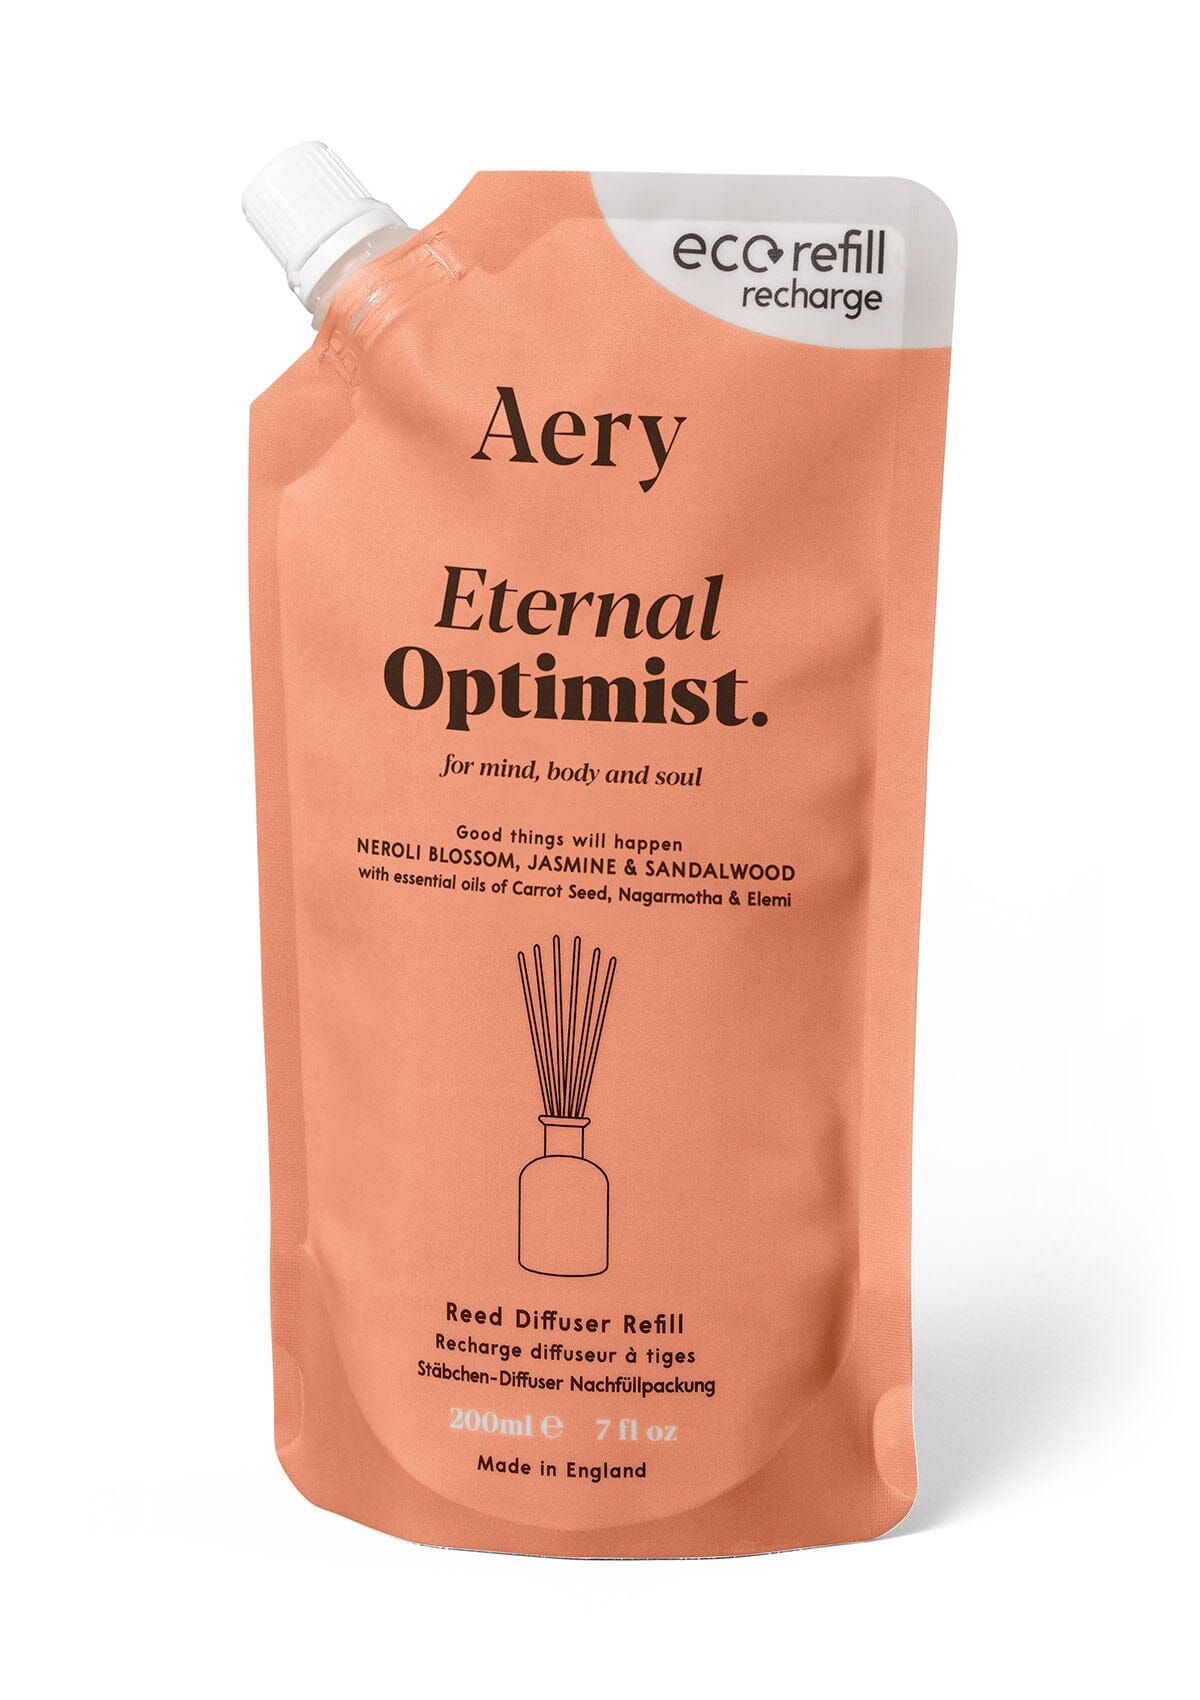 Orange Eternal Optimist reed diffuser by aery displayed on white background 